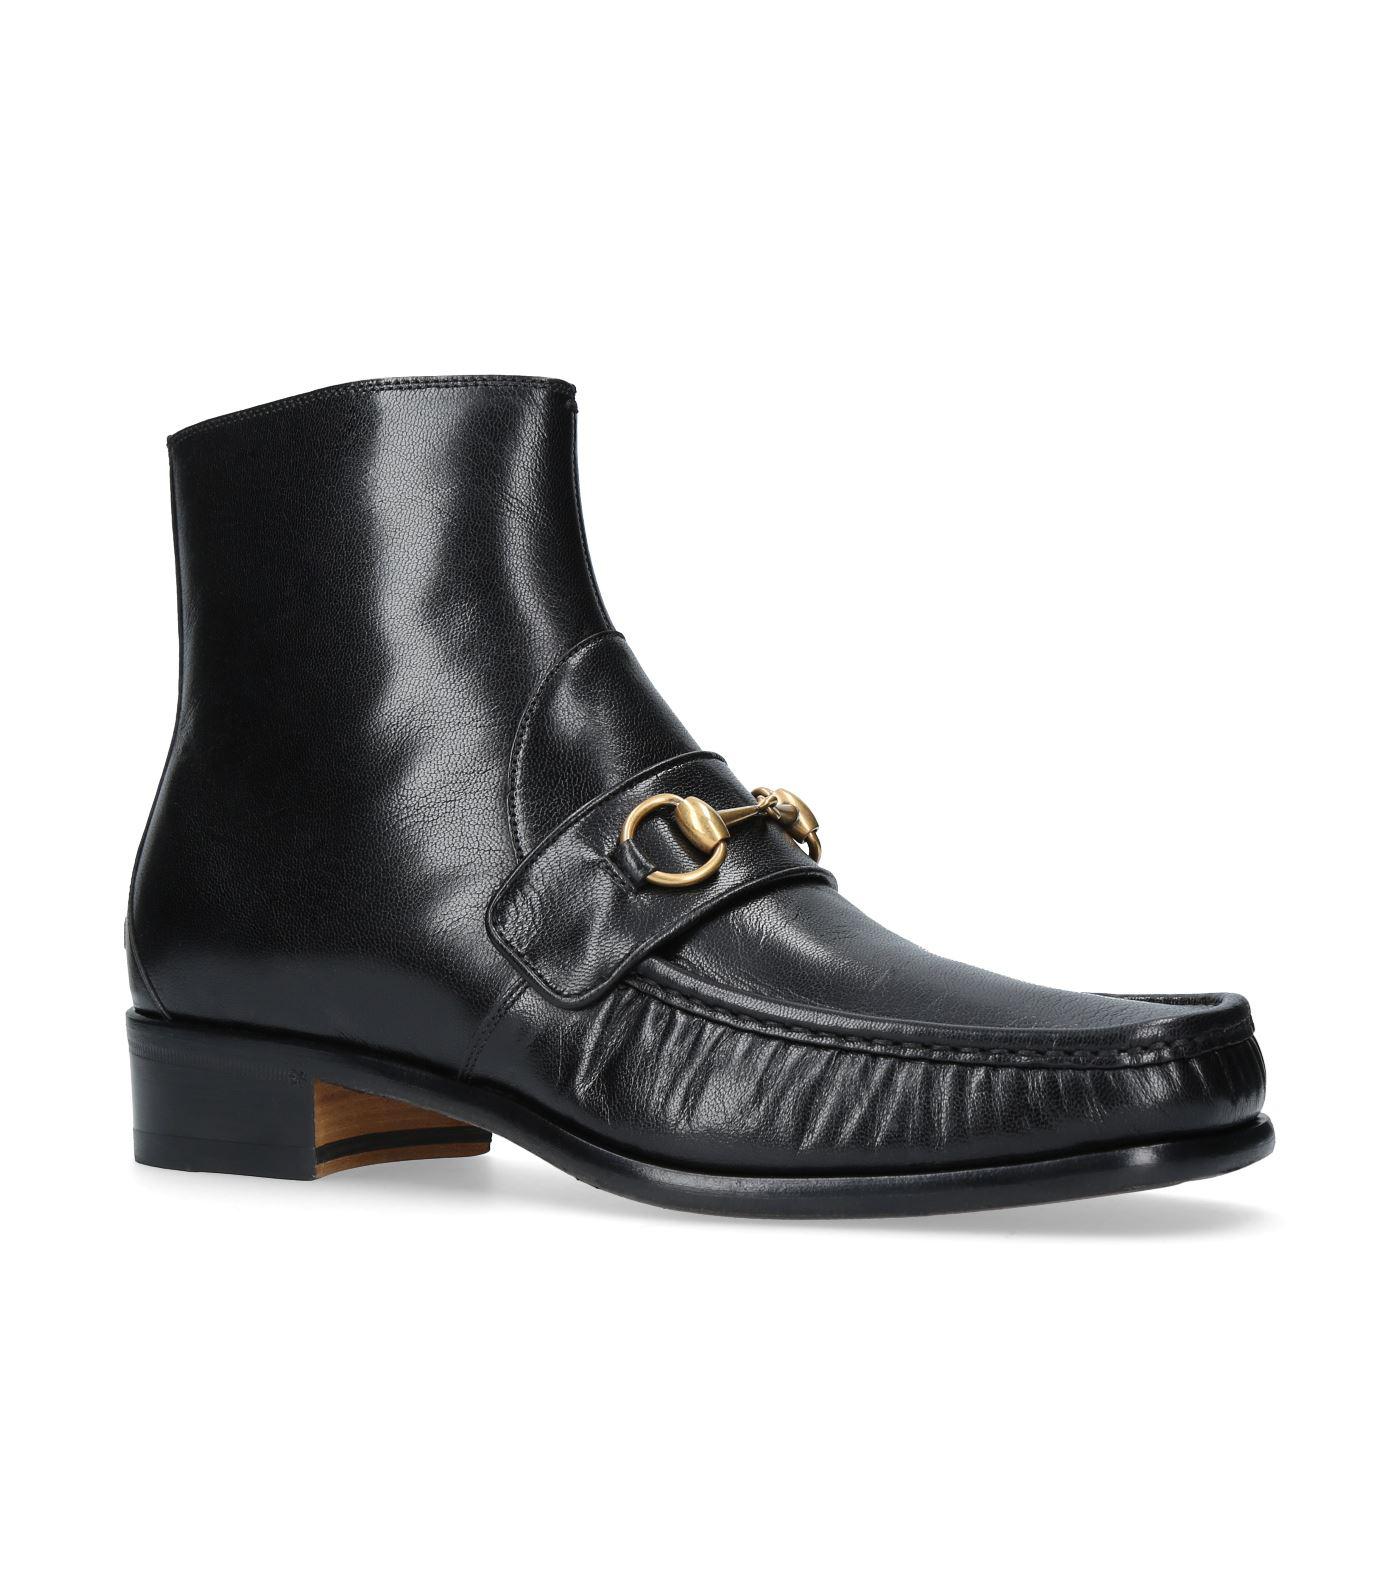 Gucci Vegas Horsebit Ankle Boots in Black | Lyst